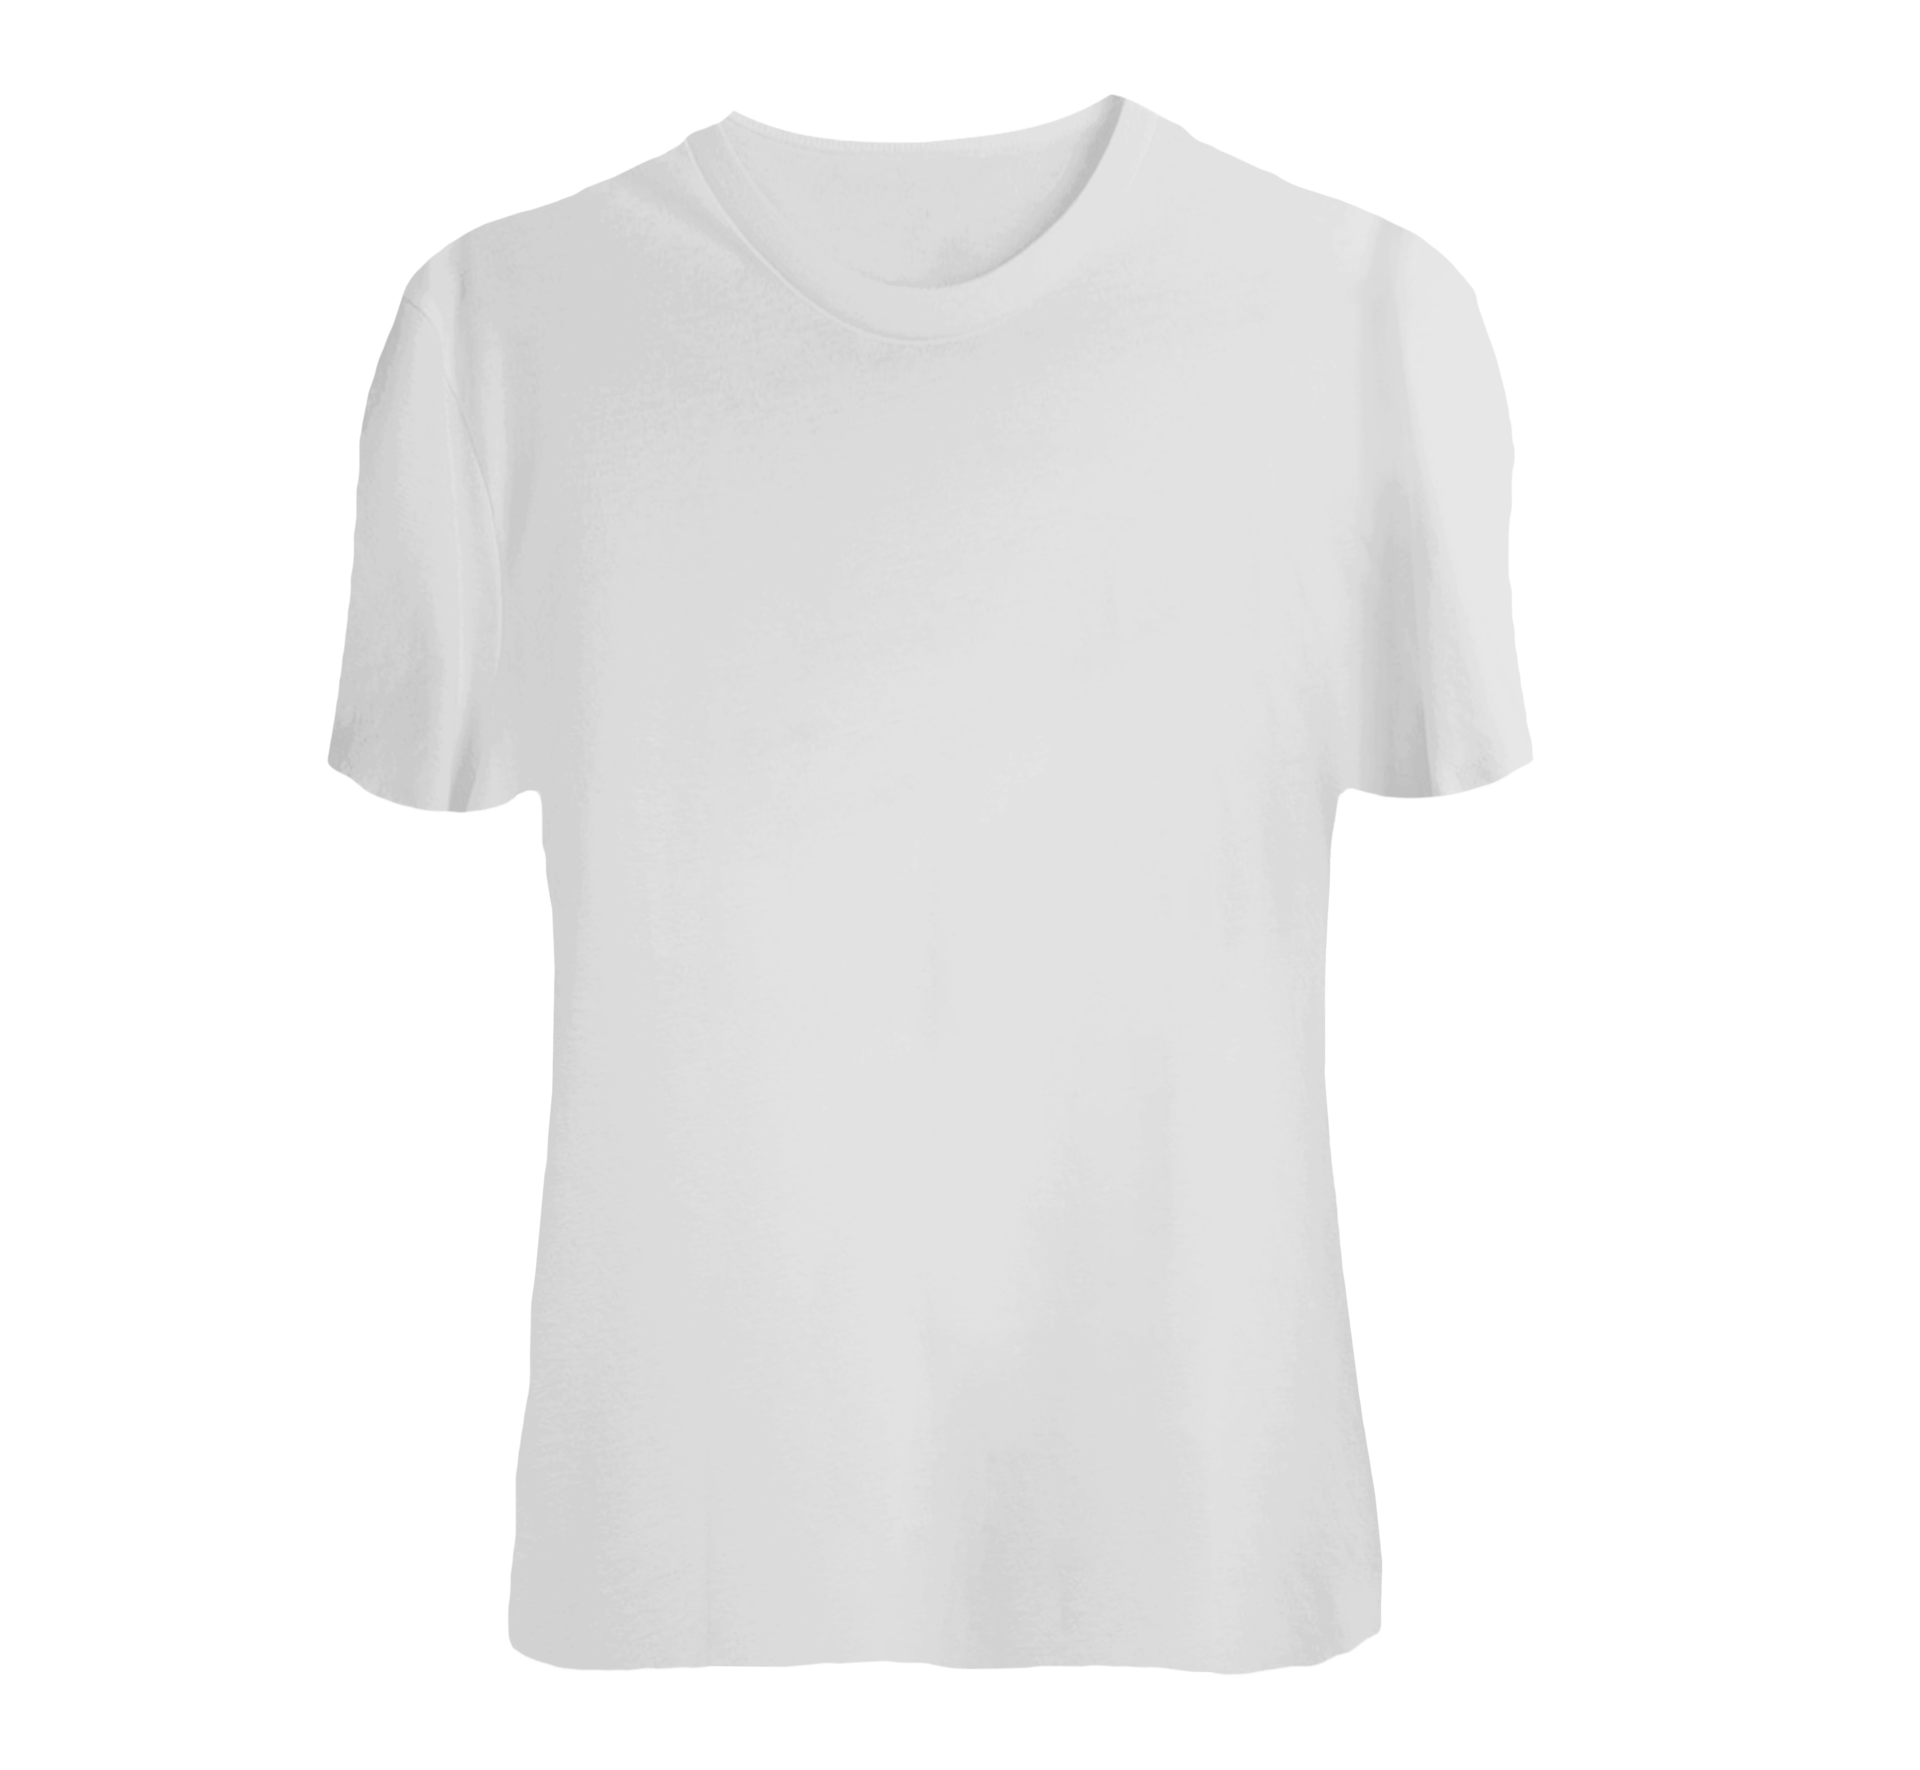 white t shirt 21095974 PNG